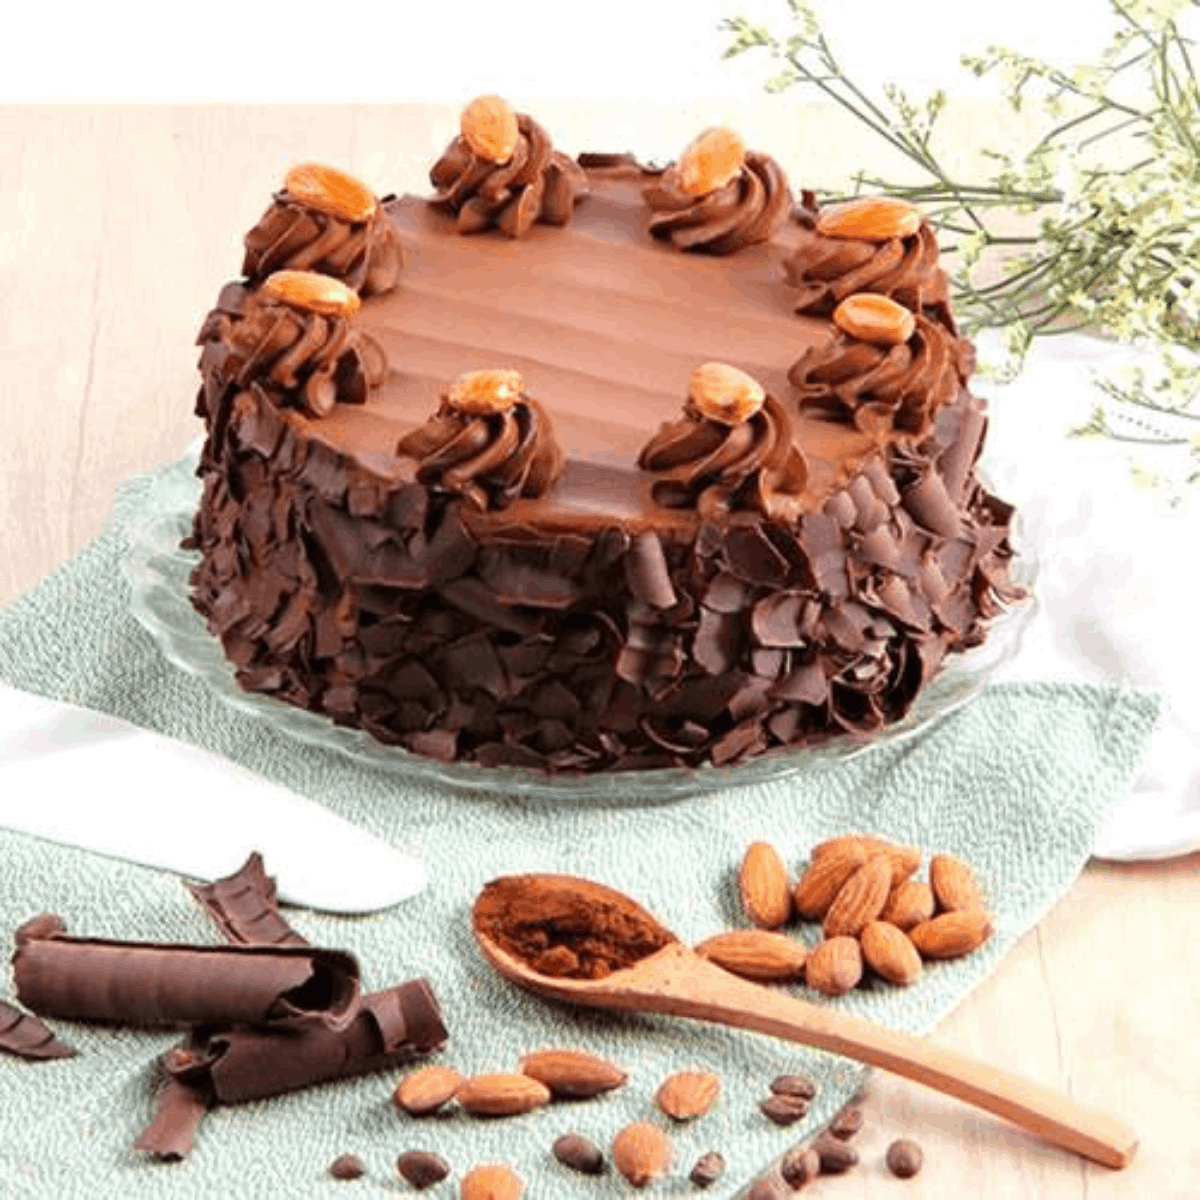 Chocolate-almond-birthday-cake-500x500-1 (1)